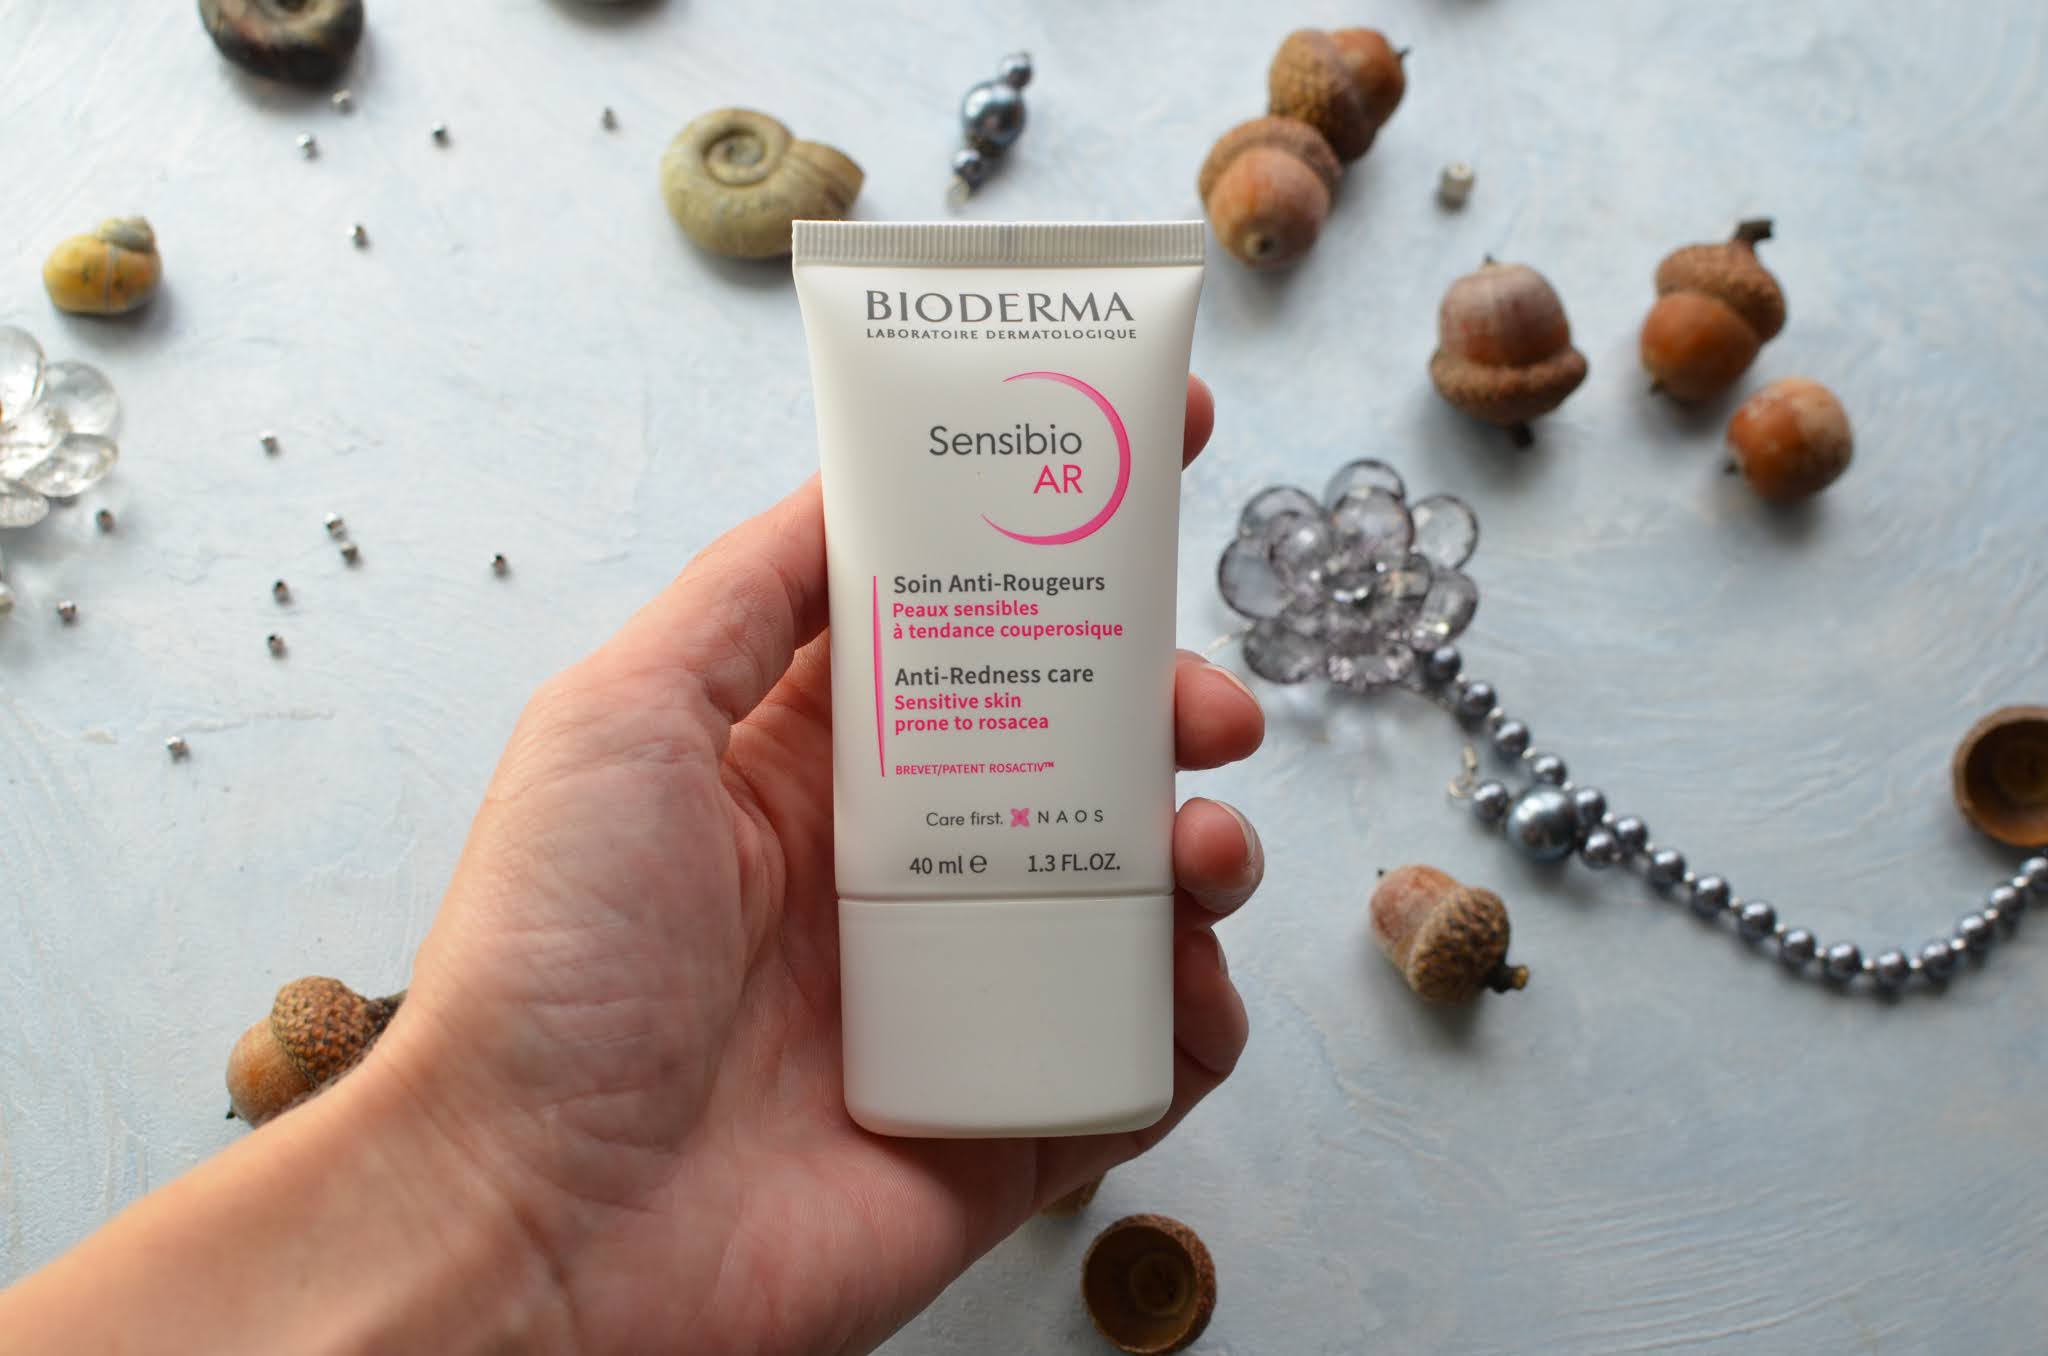 Bioderma Sensibio Anti-Redness care Cream Sensitive skin prone to rosacea заспокоюючий крем для чутливої шкіри схильної до почервонінь